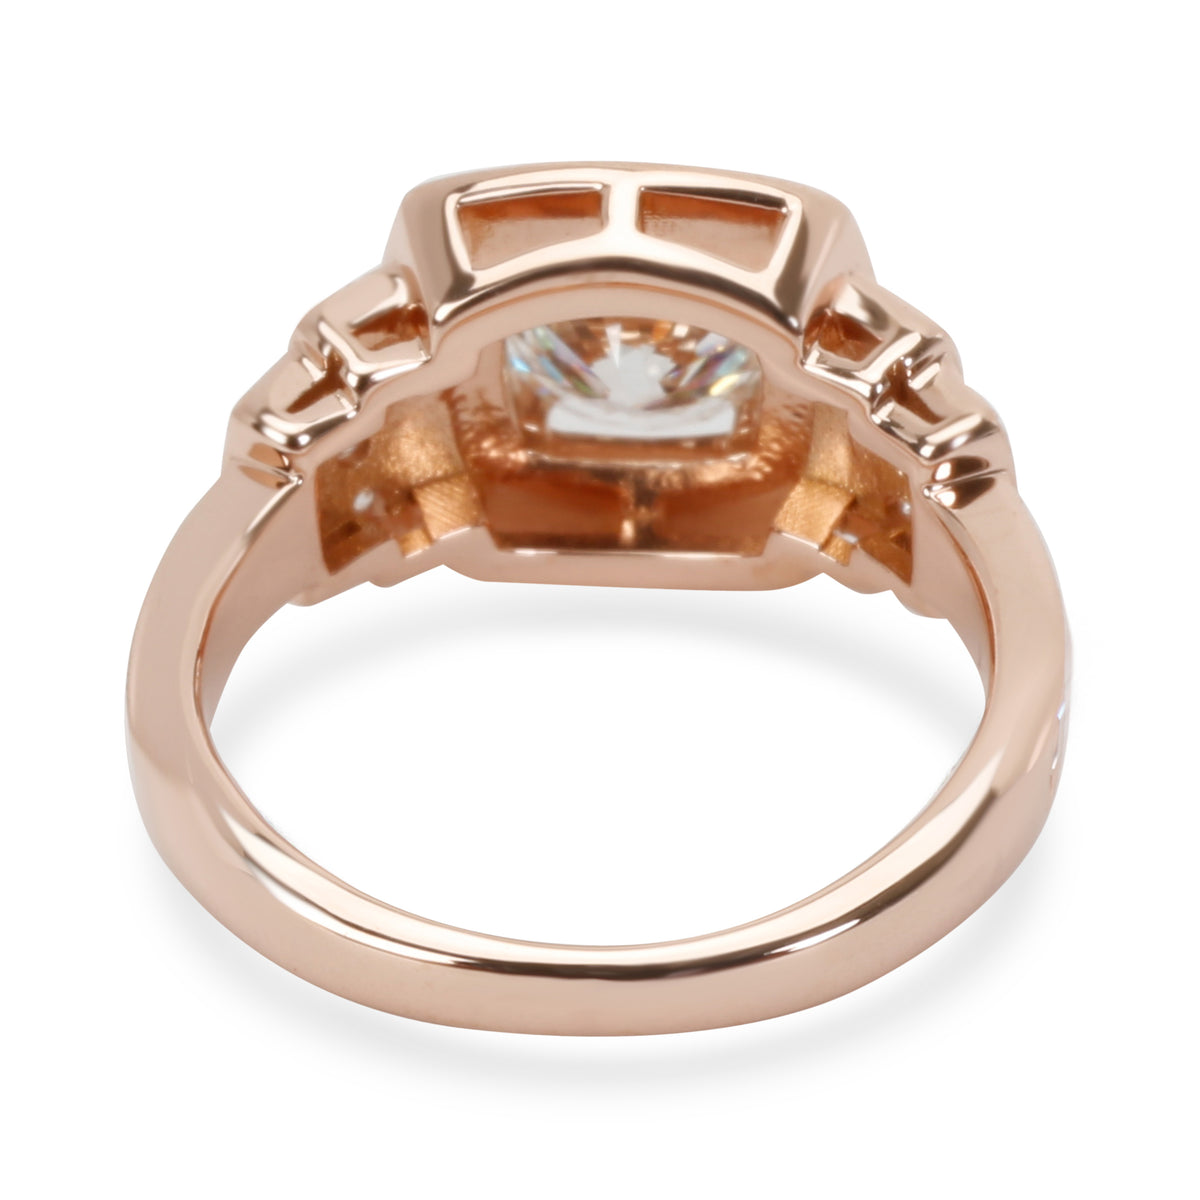 James Allen Halo Diamond Diamond Engagement Ring in 14K Rose Gold F VVS2 1.25 CT